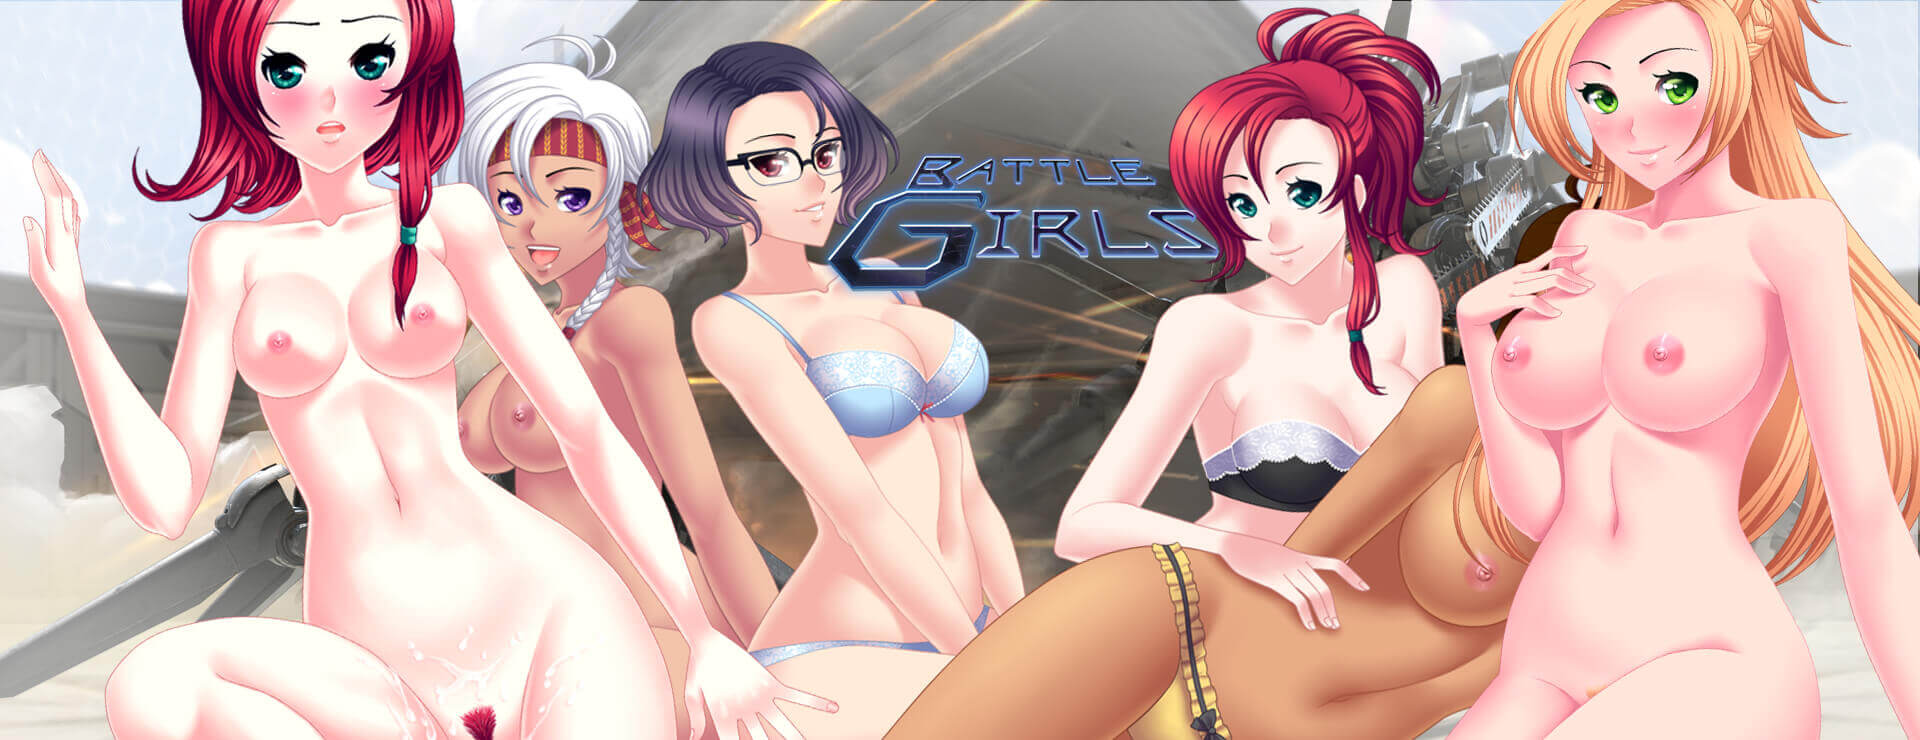 Battle Girls - Visual Novel Game